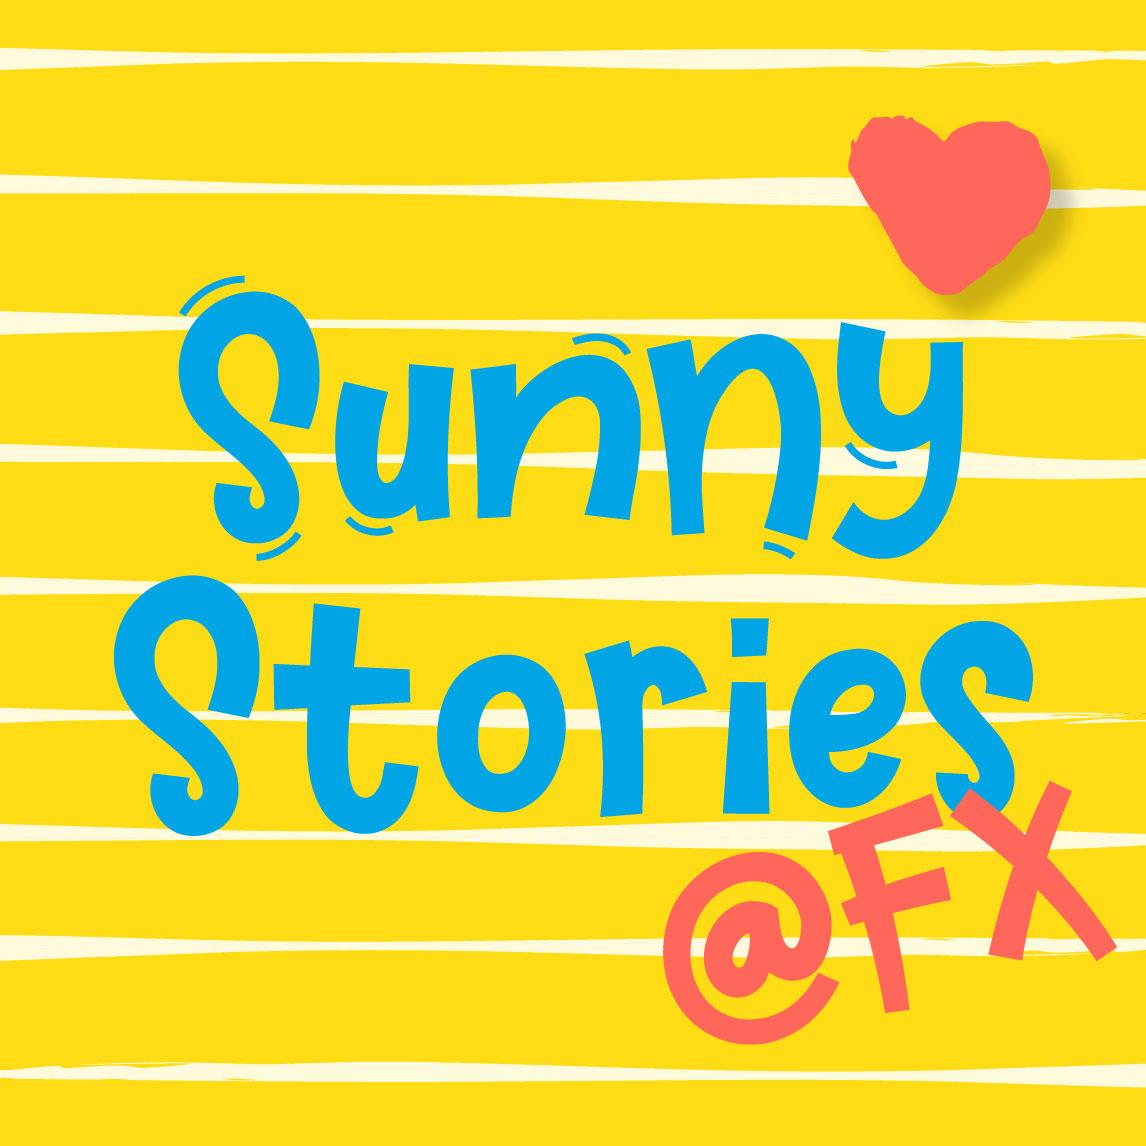 Sunny stories Logo